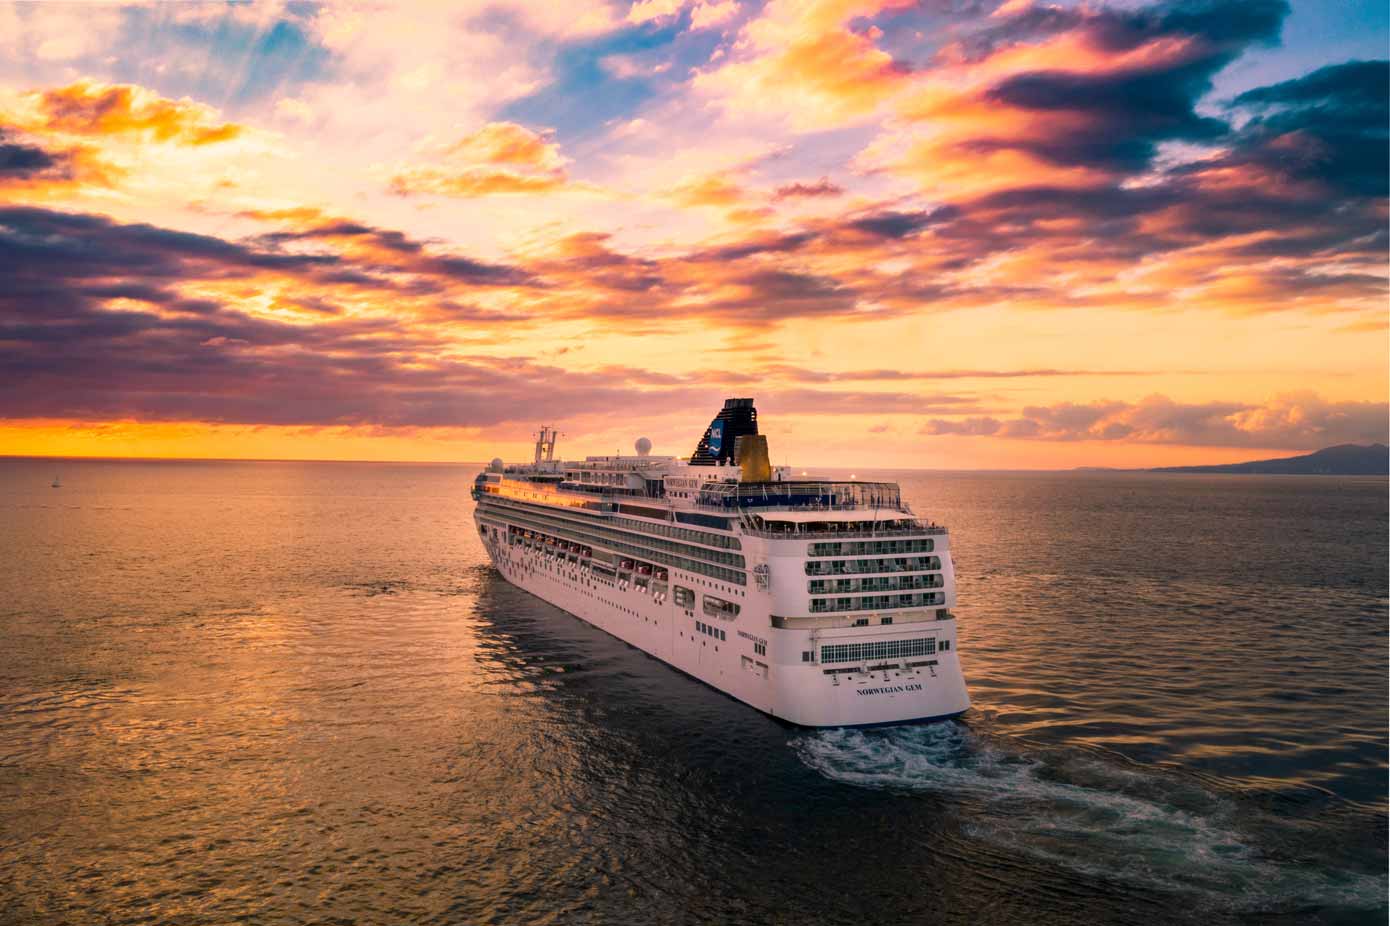 Norwegian Gem cruise ship at sunset.